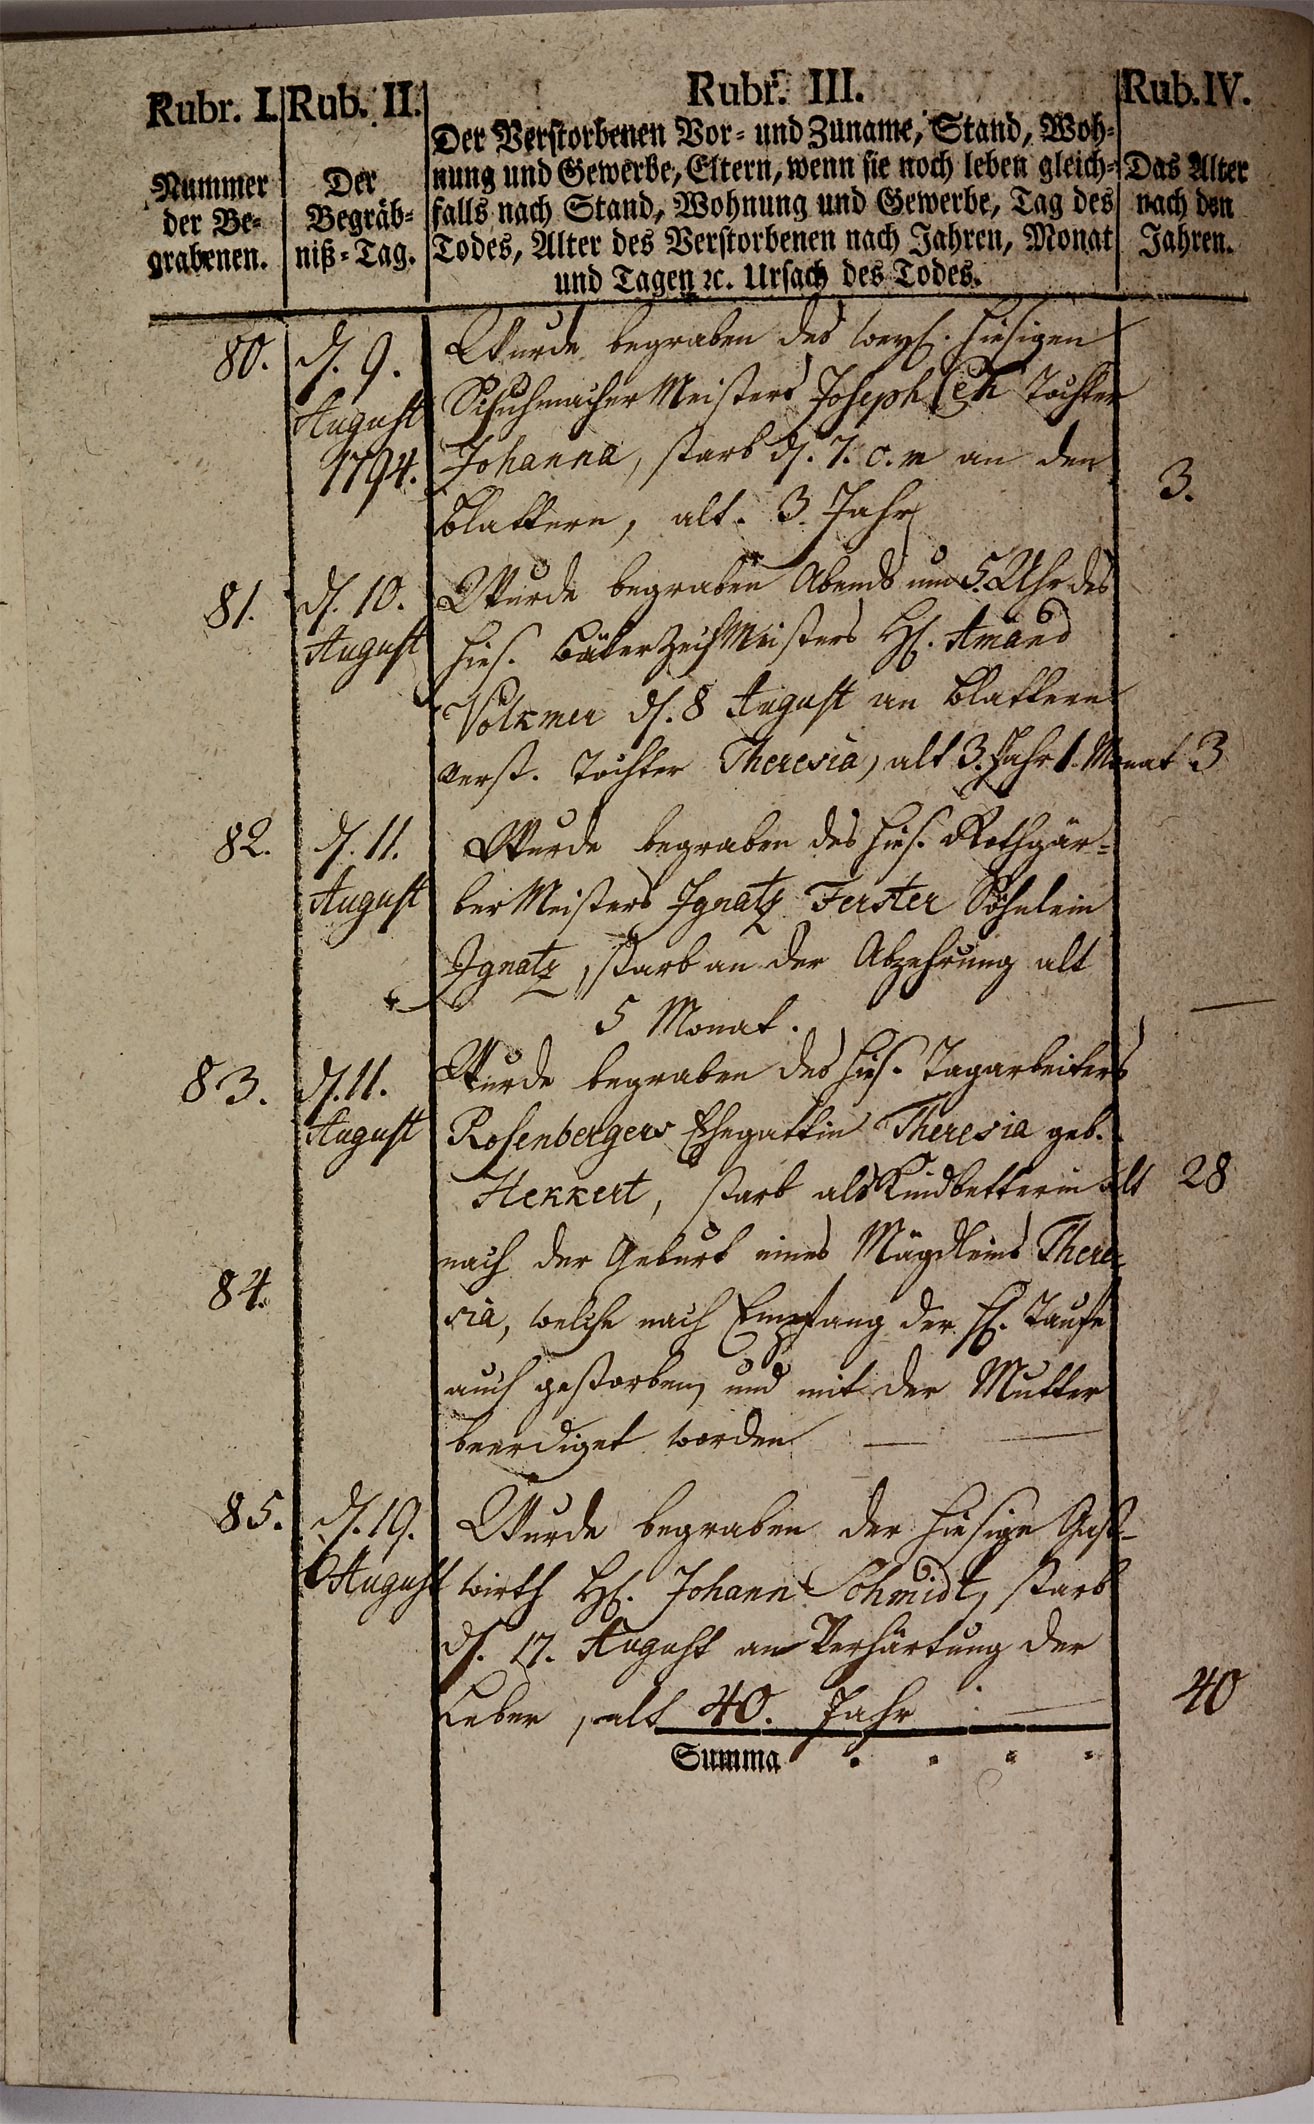 Kirchenbuch 1793 Seite 80